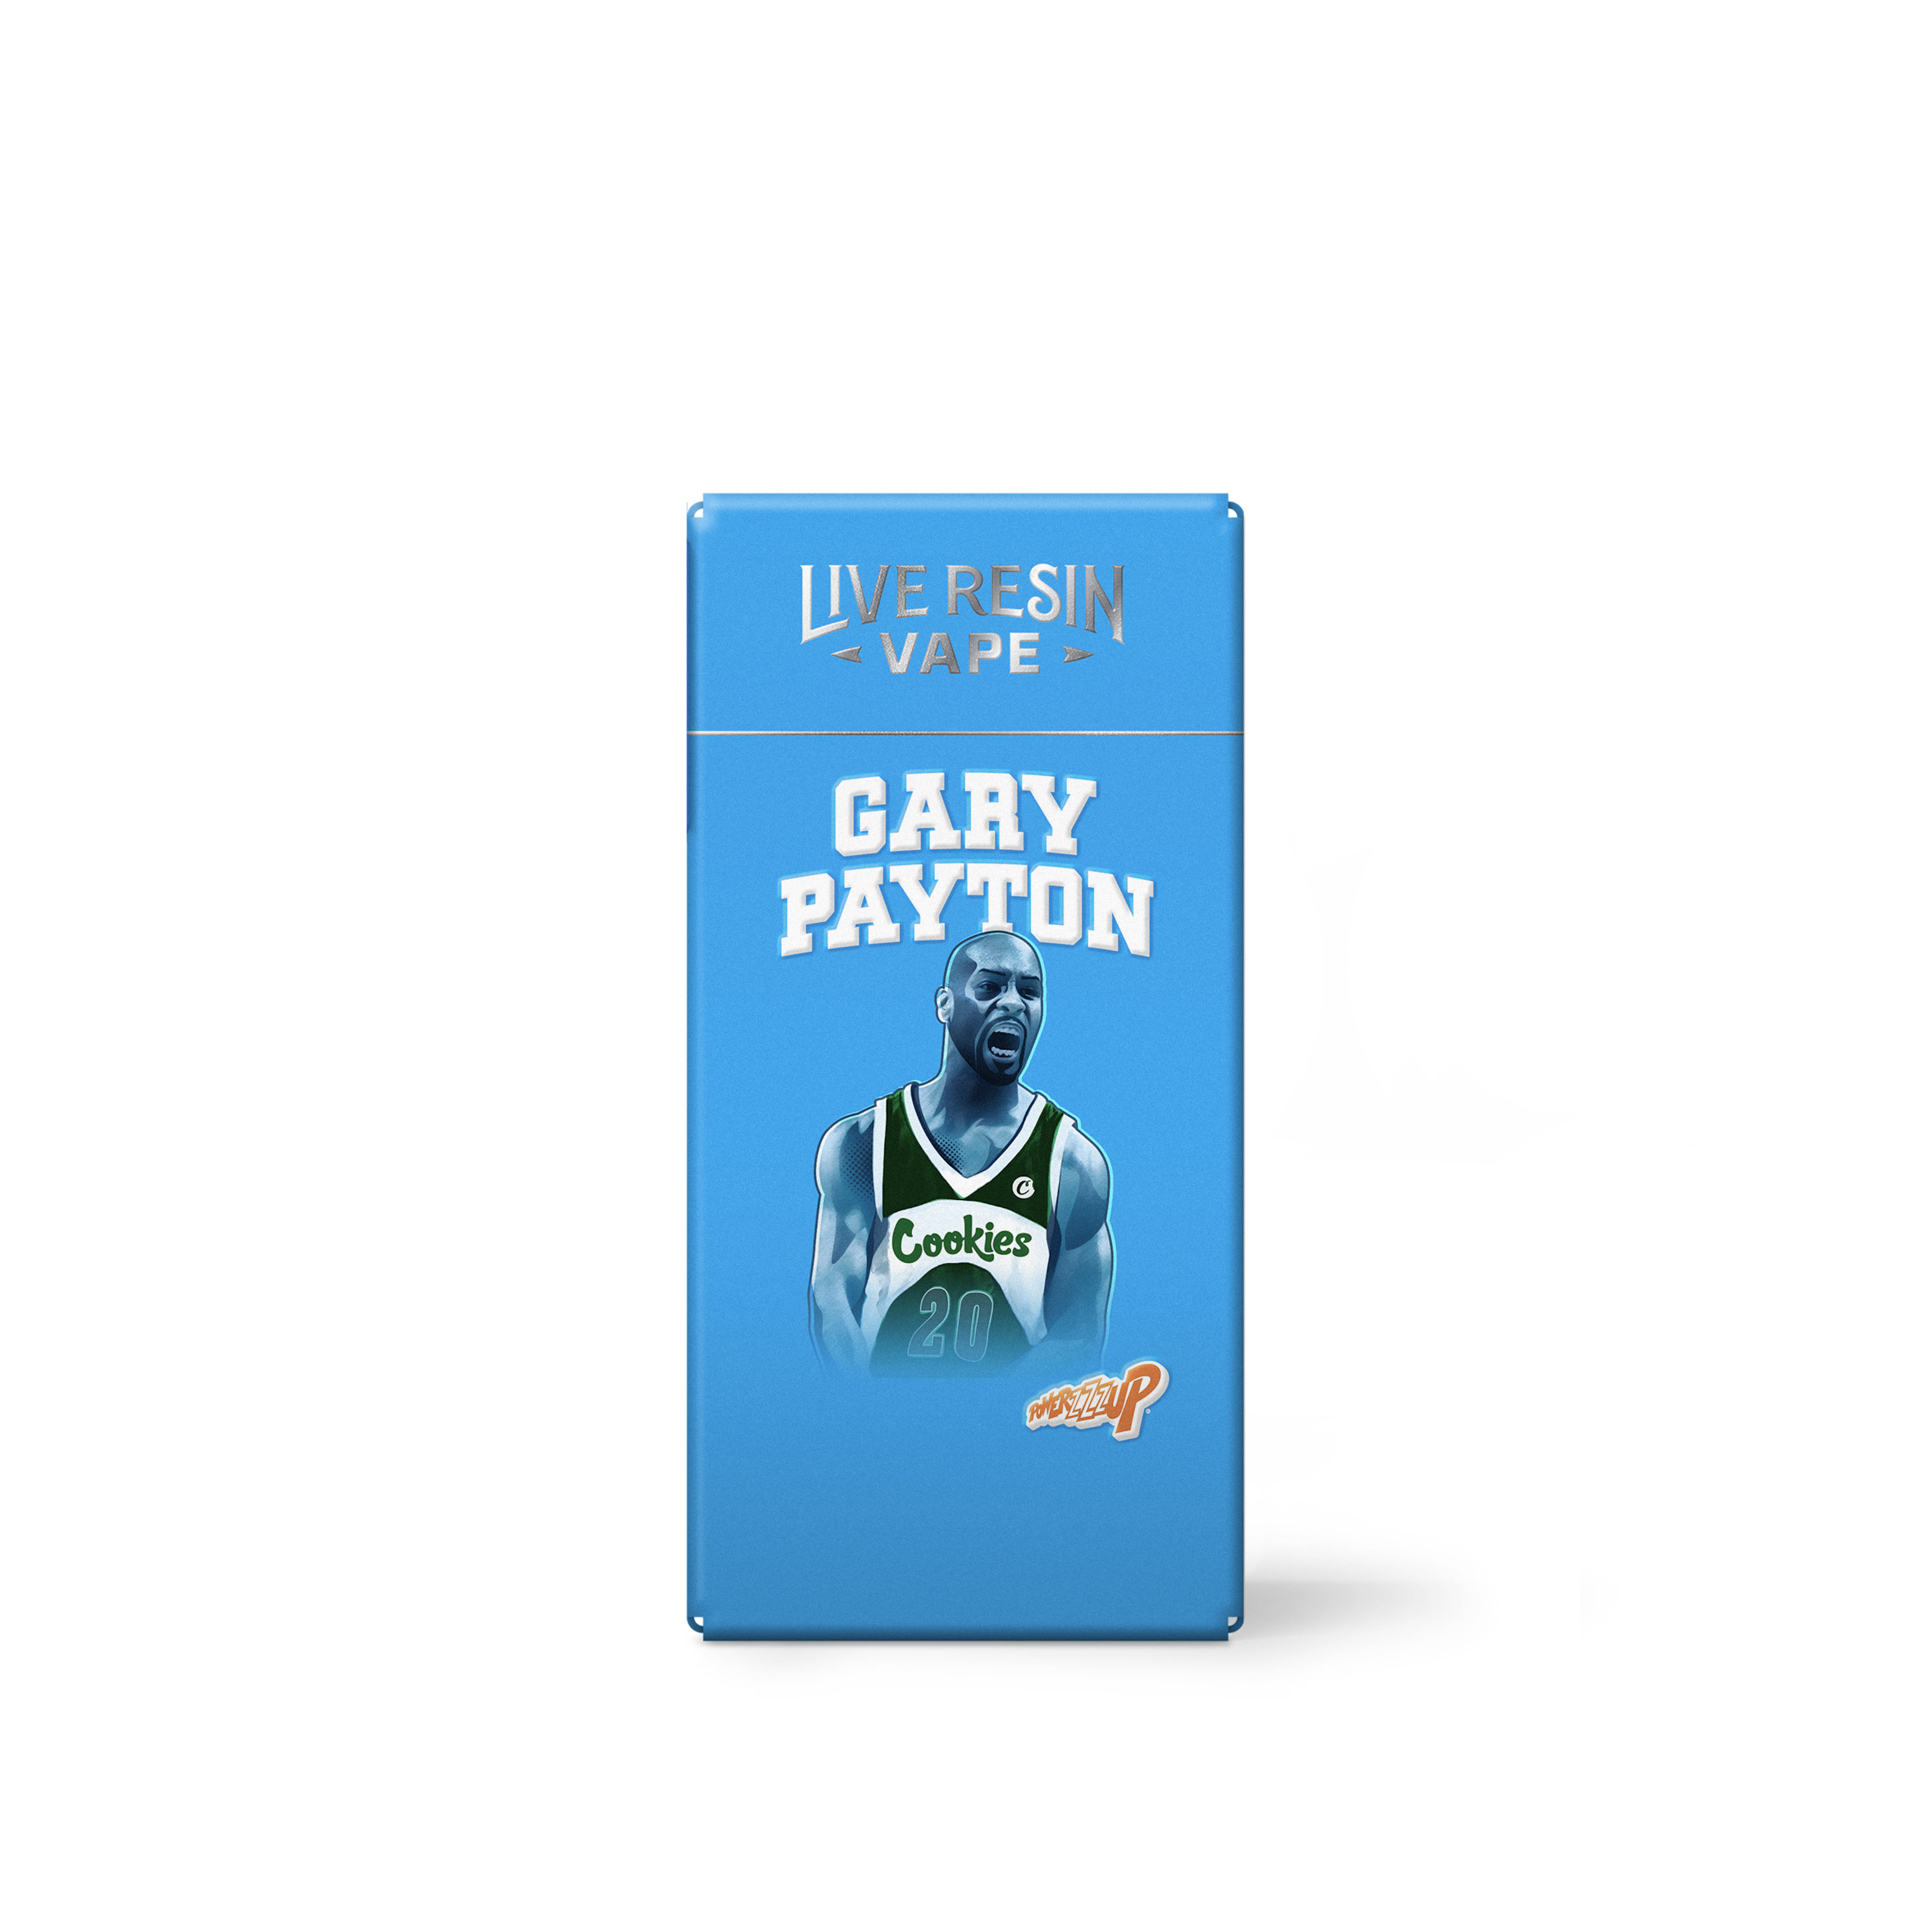 Cookies - Gary Payton - THC - Live Resin - Cartridge - Vape - 0.5g - CA